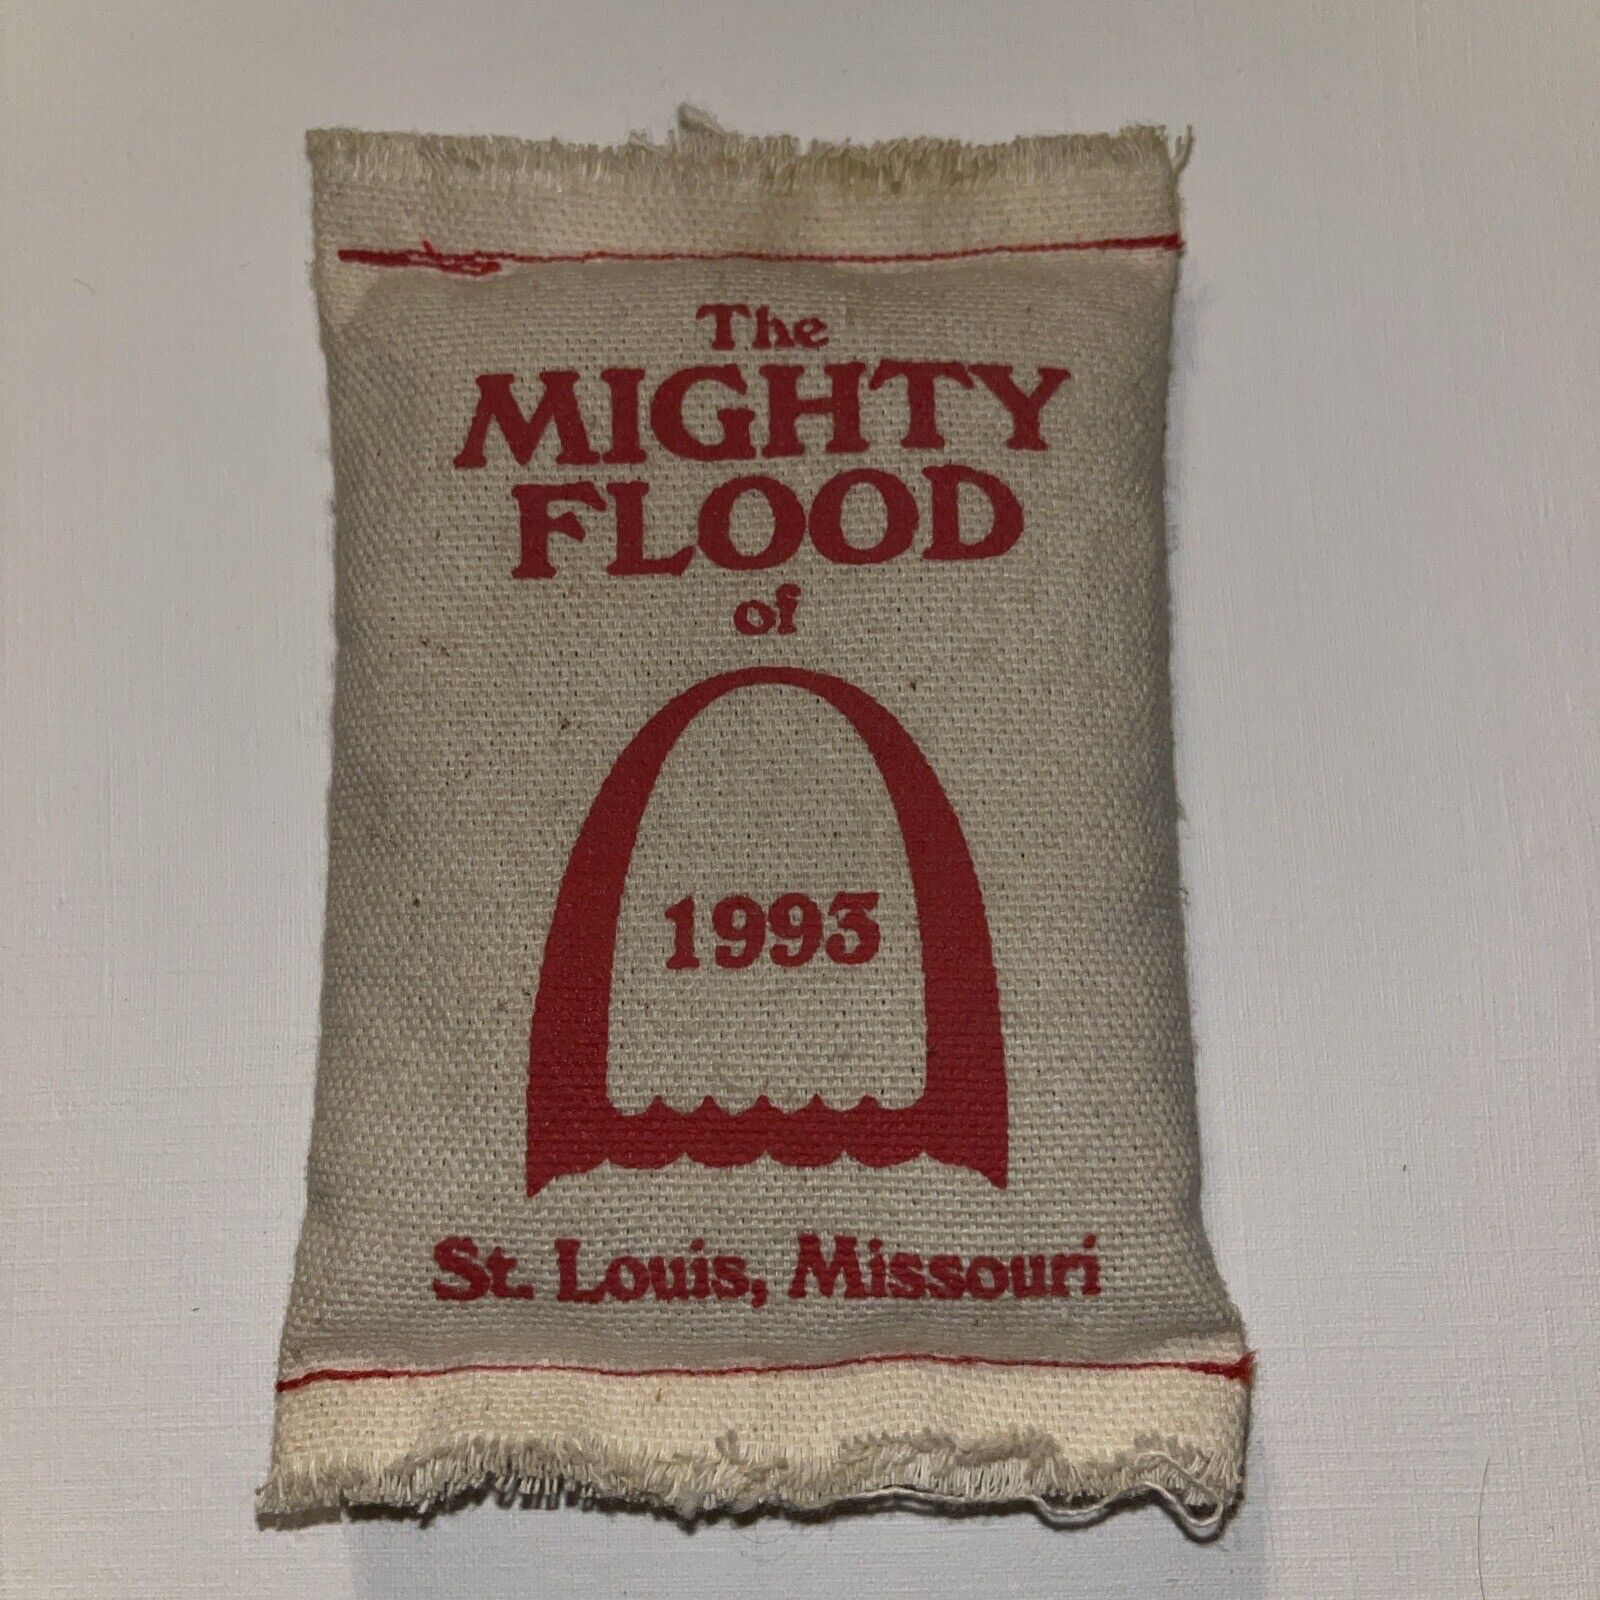 Souvenir Sandbag, The Mighty Flood Of 1993, Mississippi River St. Louis Missouri